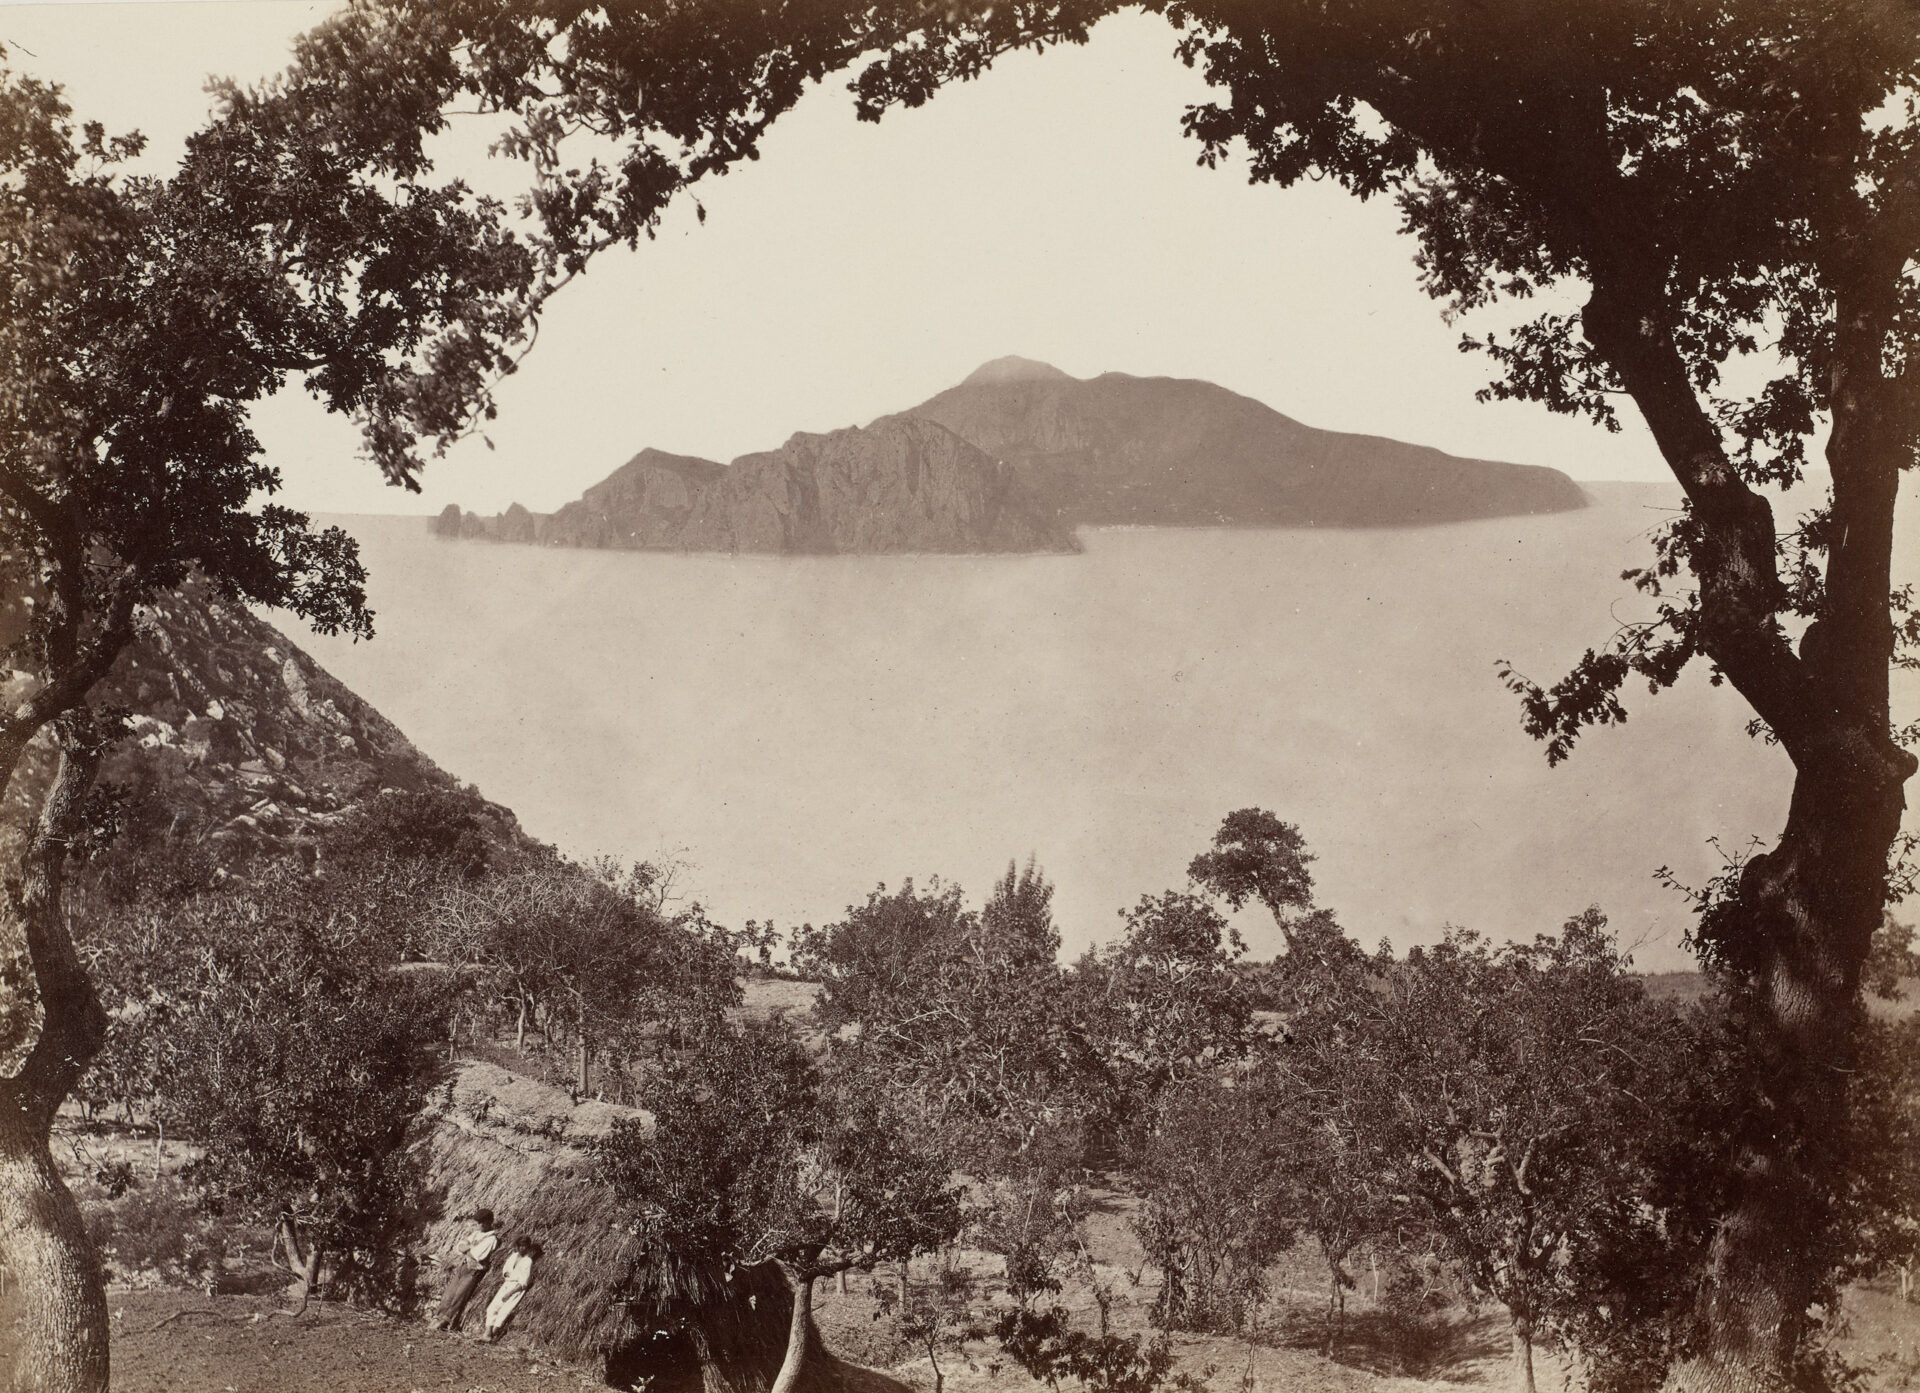 Giorgio Sommer, Sorrent, Blick auf Capri von Massa Lubrense aus, um 1860–1865, Albuminpapier auf Karton, Städel Museum, Frankfurt am Main, Public Domain